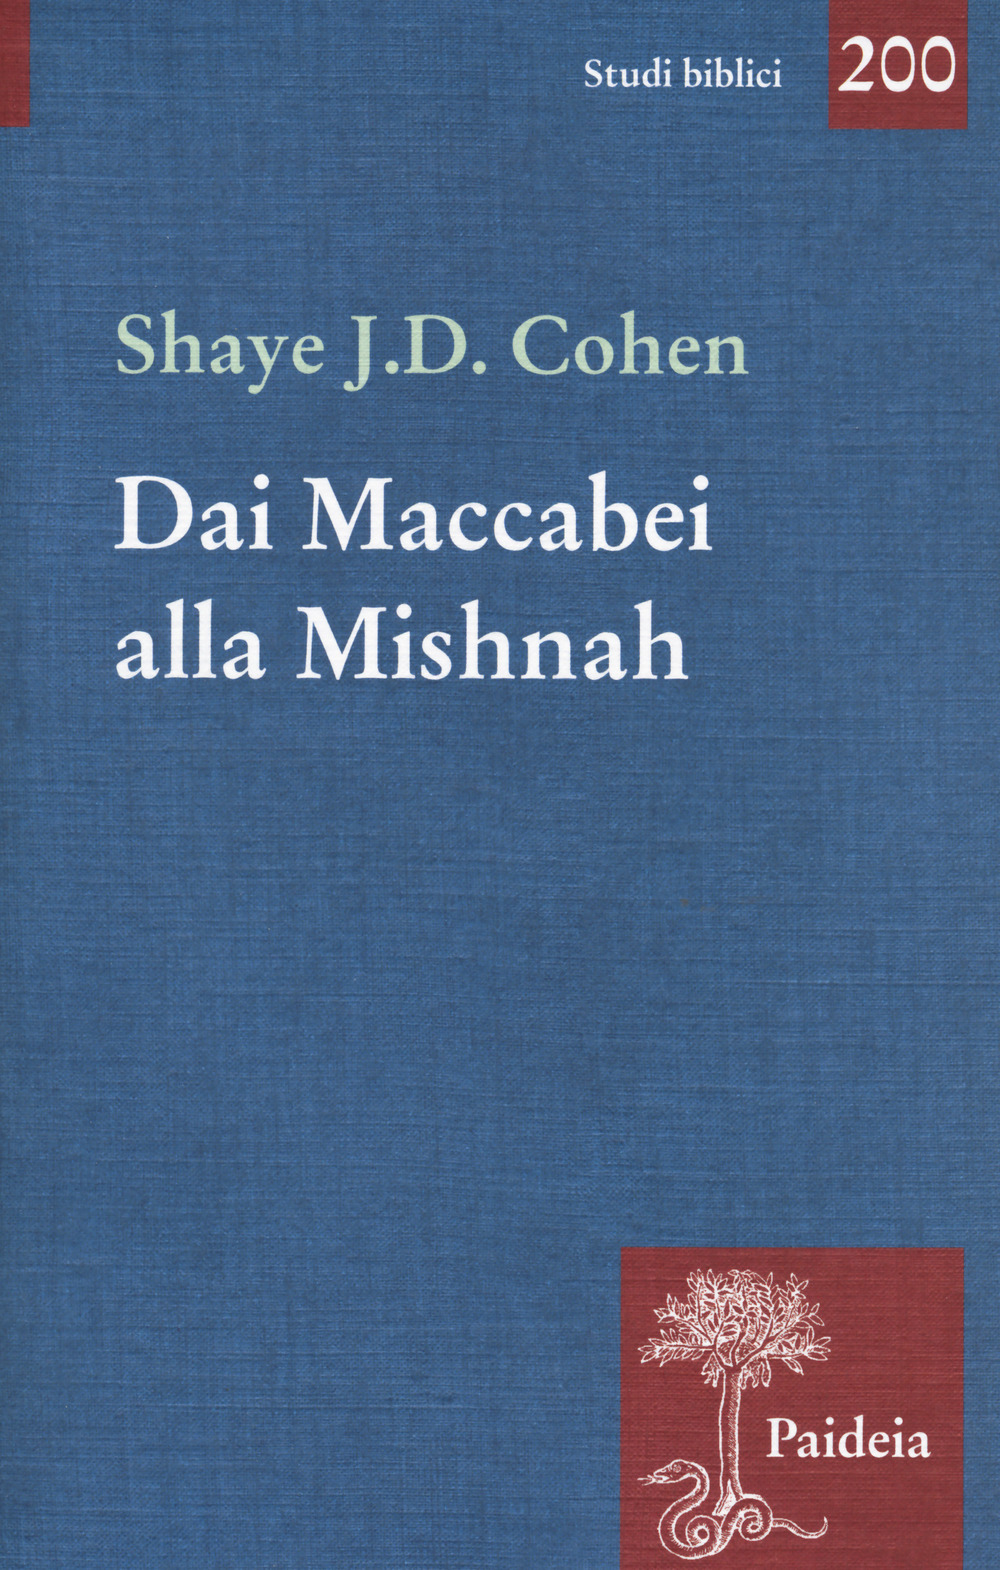 Dai Maccabei alla Mishnah